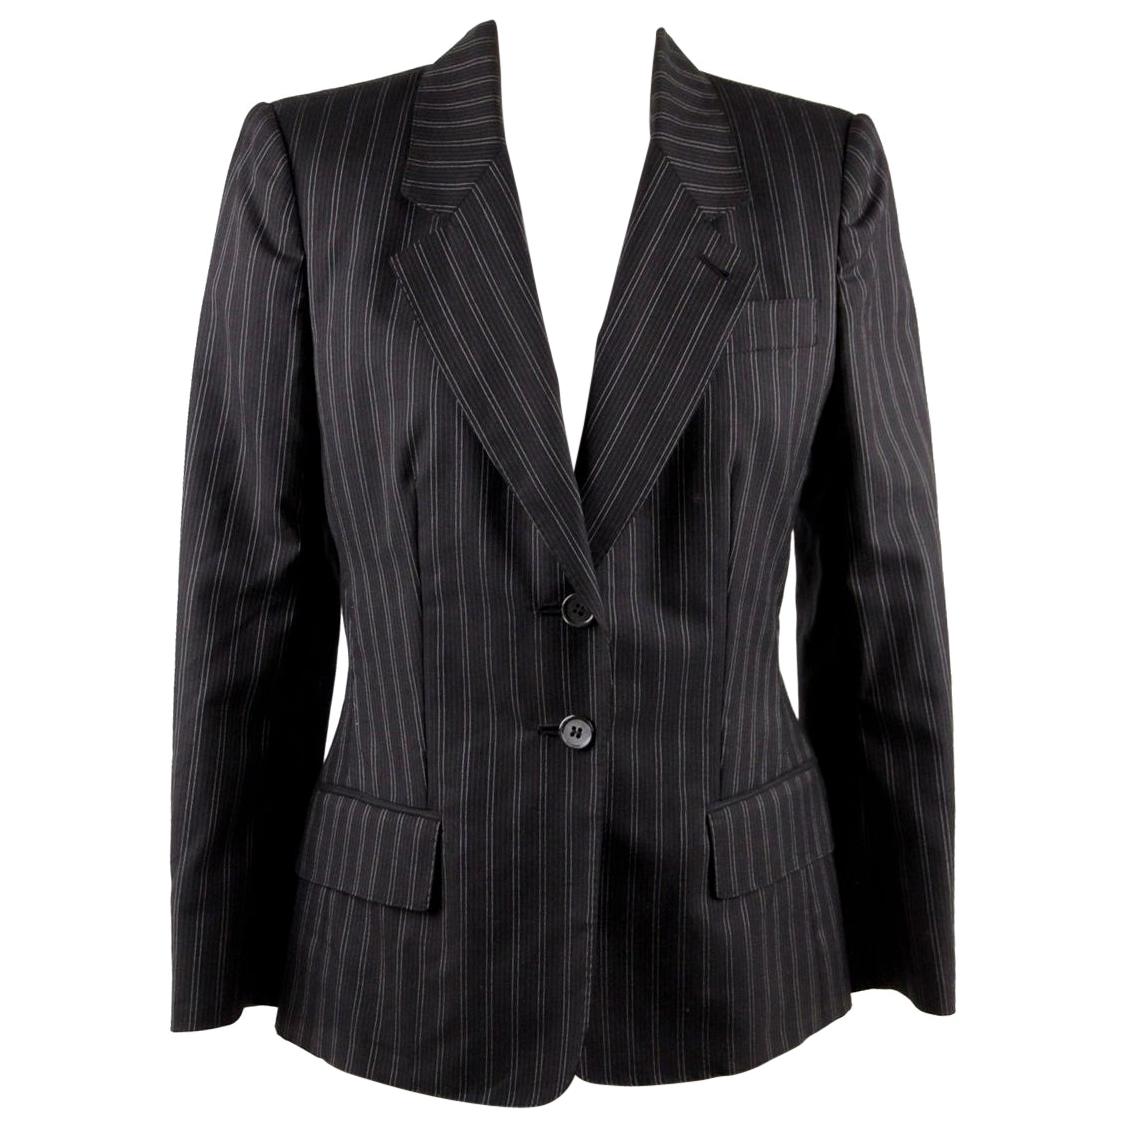 Yves Saint Laurent Rive Gauche Black Pinstriped Blazer Jacket Size 38